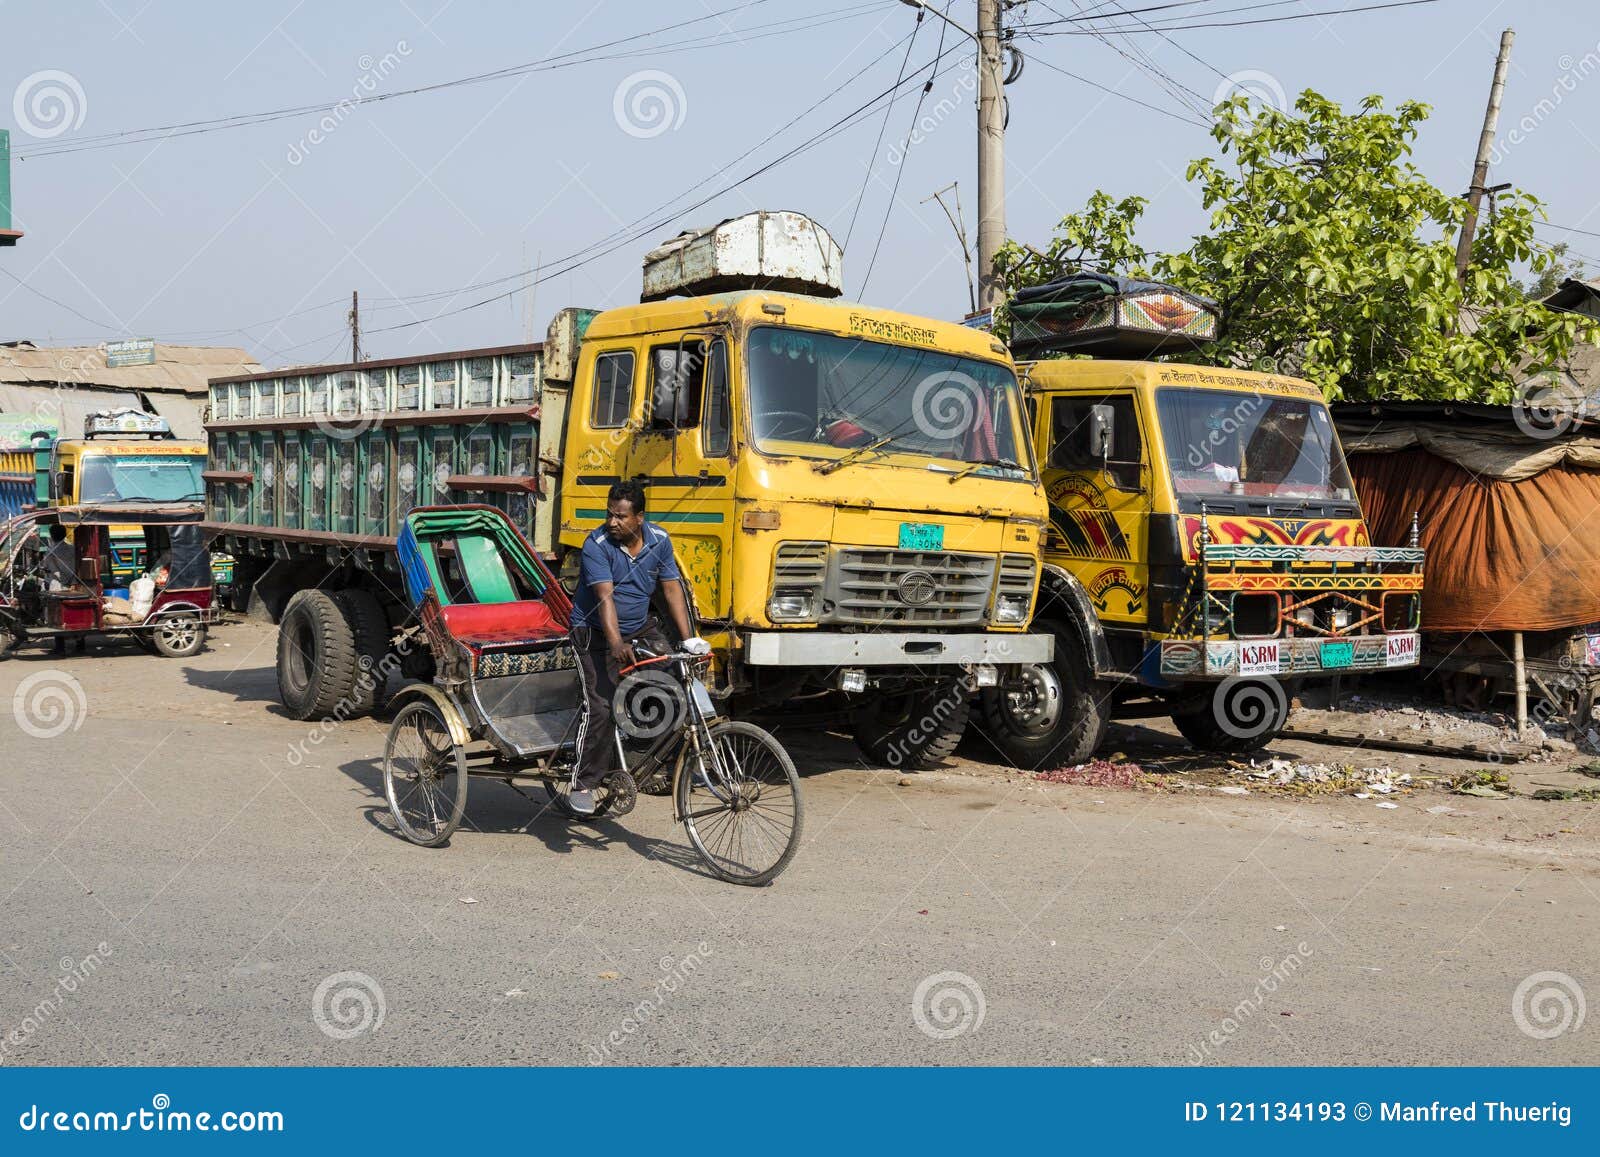 Khulna, Bangladesch, am 28. Februar 2017: Trishaw-Fahrer-Antriebe in Khulna. Khulna, Bangladesch, am 28. Februar 2017: Trishaw-Fahrer fährt in Khulna vor einem LKW in der Straße